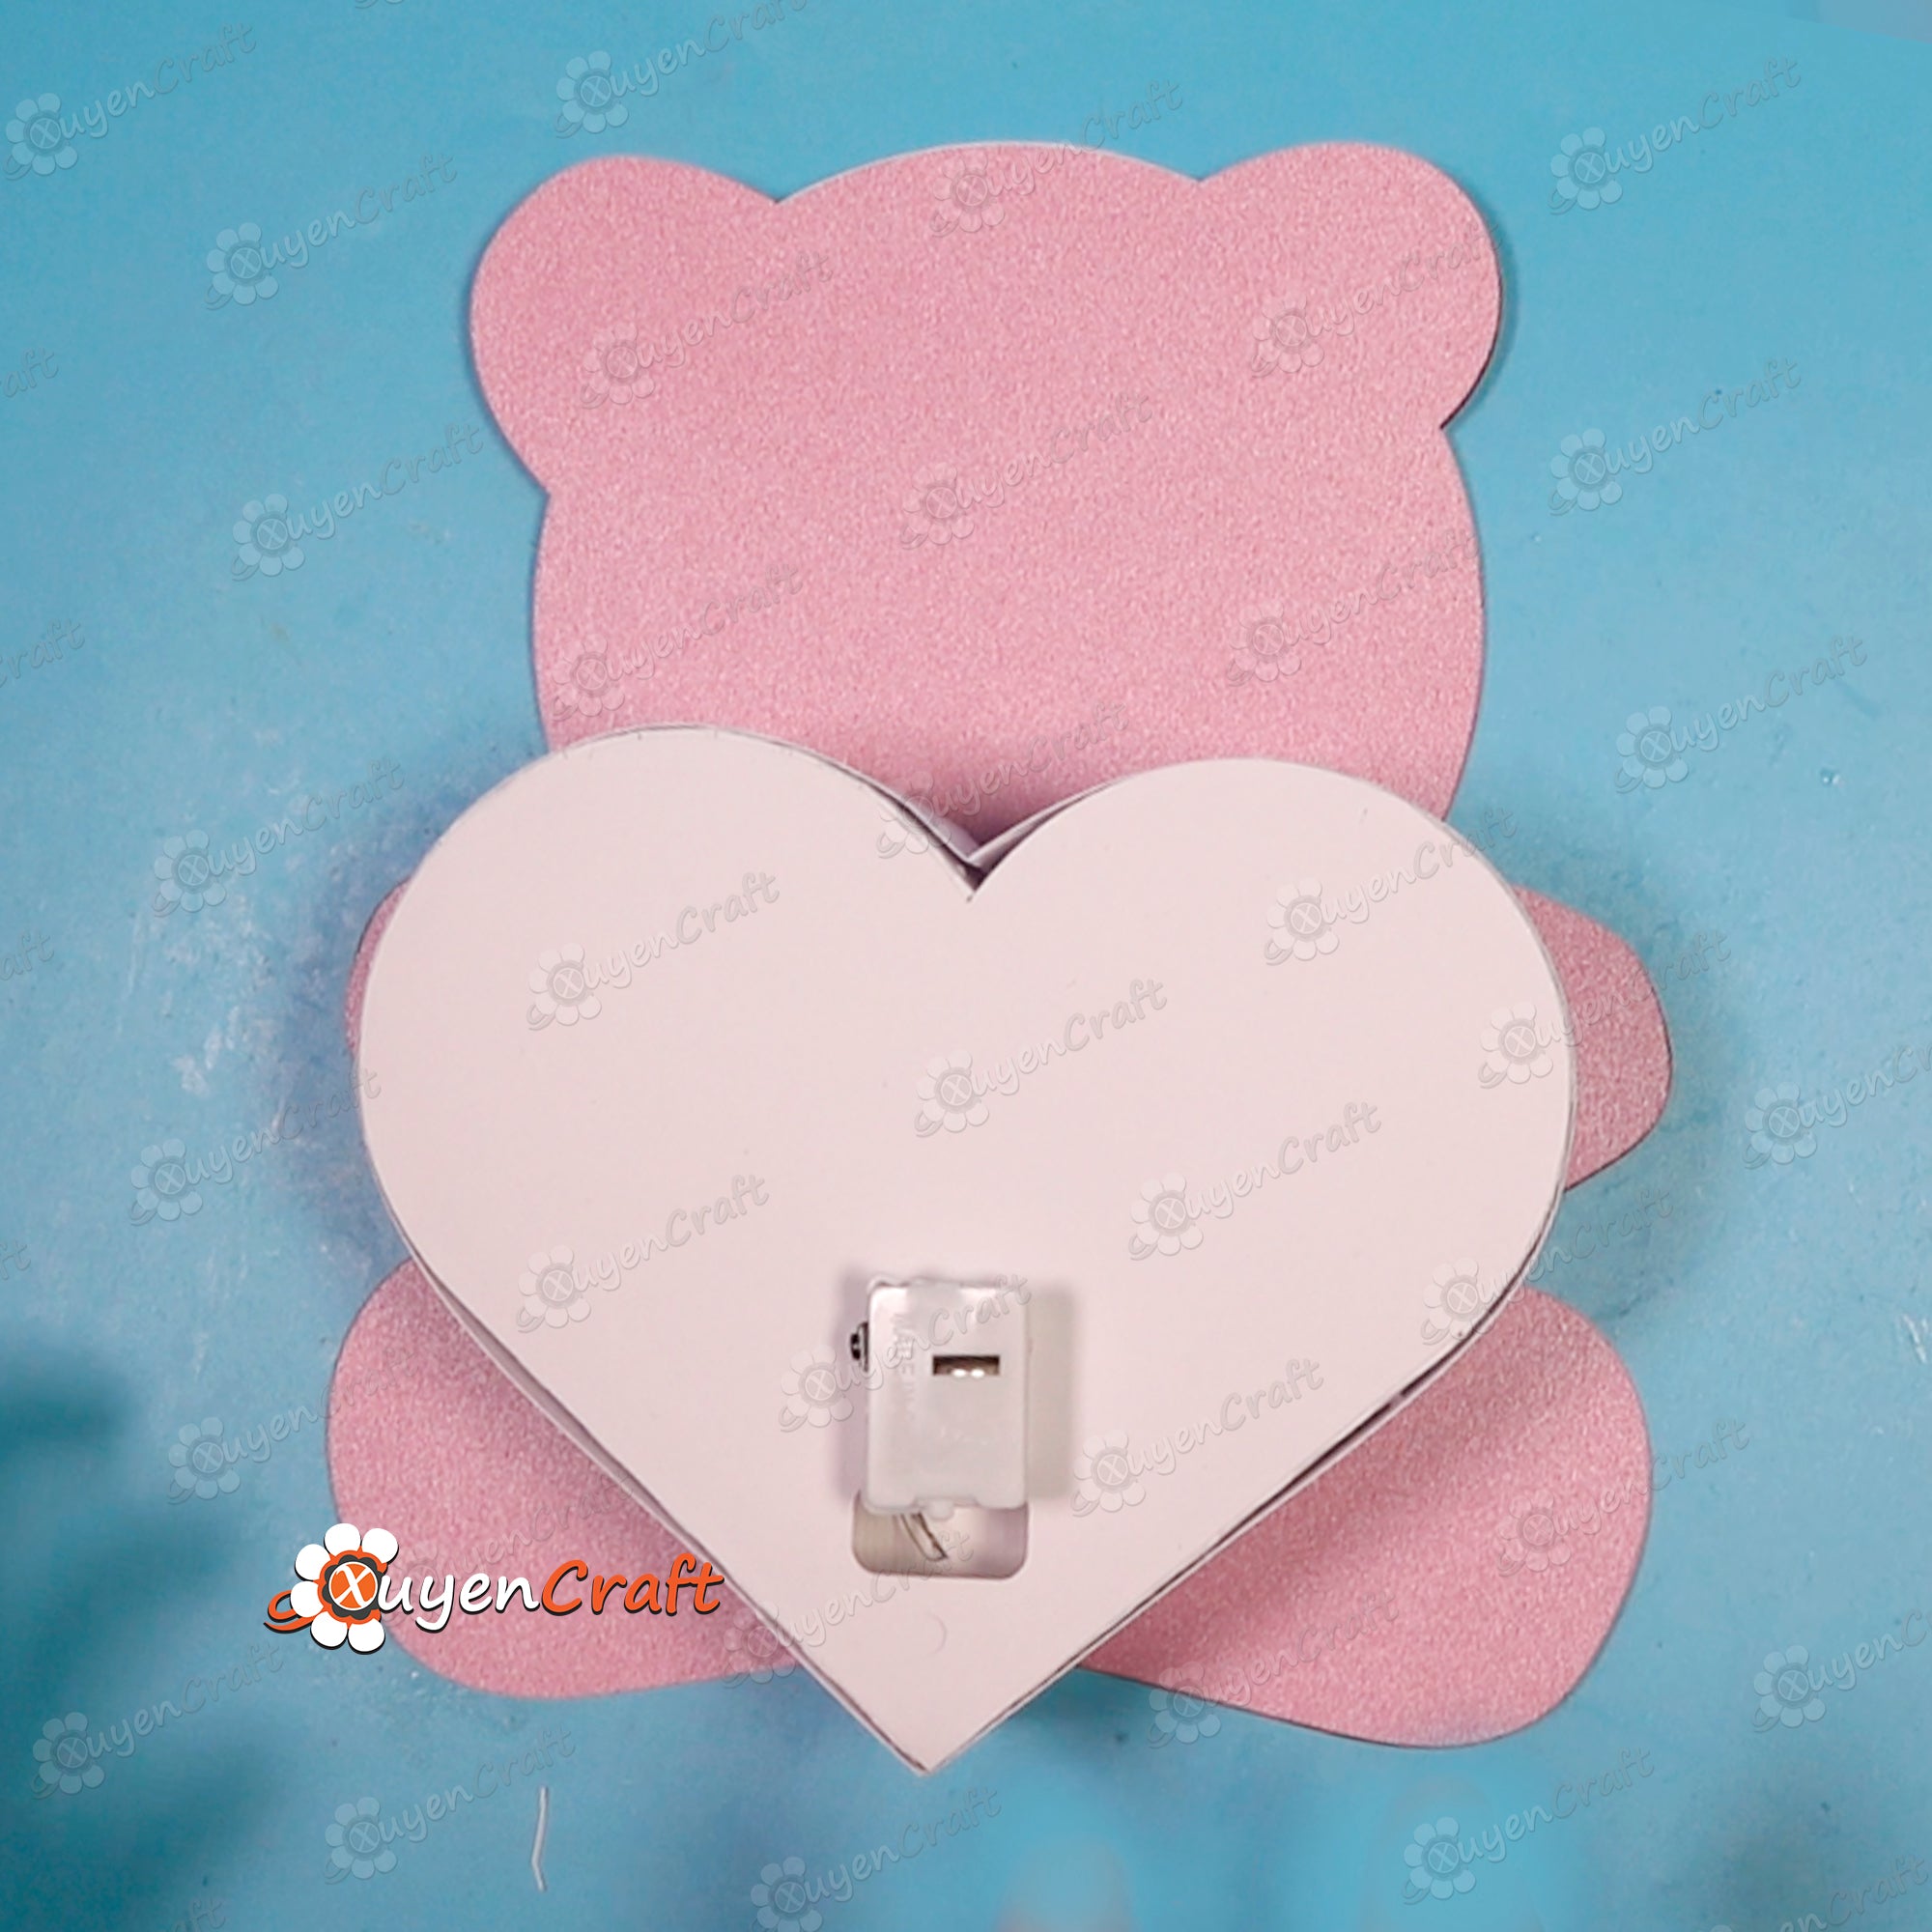 Bear Family in Panda Heart Lantern Shadow Box PDF, SVG Template - DIY Bear Family Lightbox for Valentine's Day - Panda Paper Cut